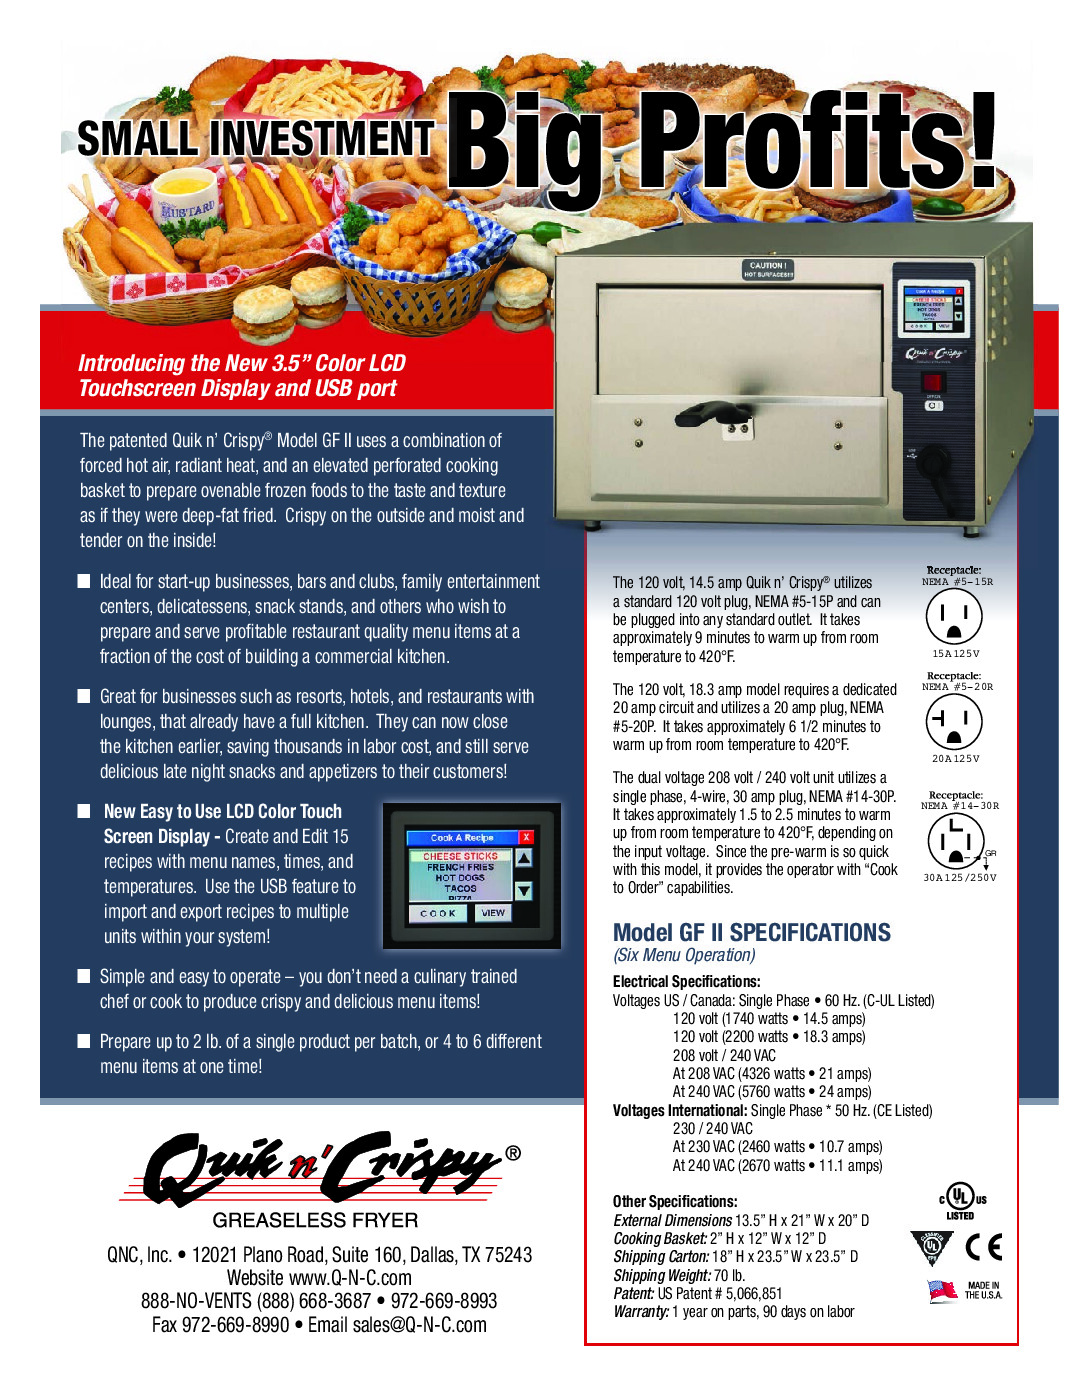 DoughXpress 600015 GF II Countertop Greaseless Commercial Air Fryer w/ 2 lb., 14.5 Amps,120v